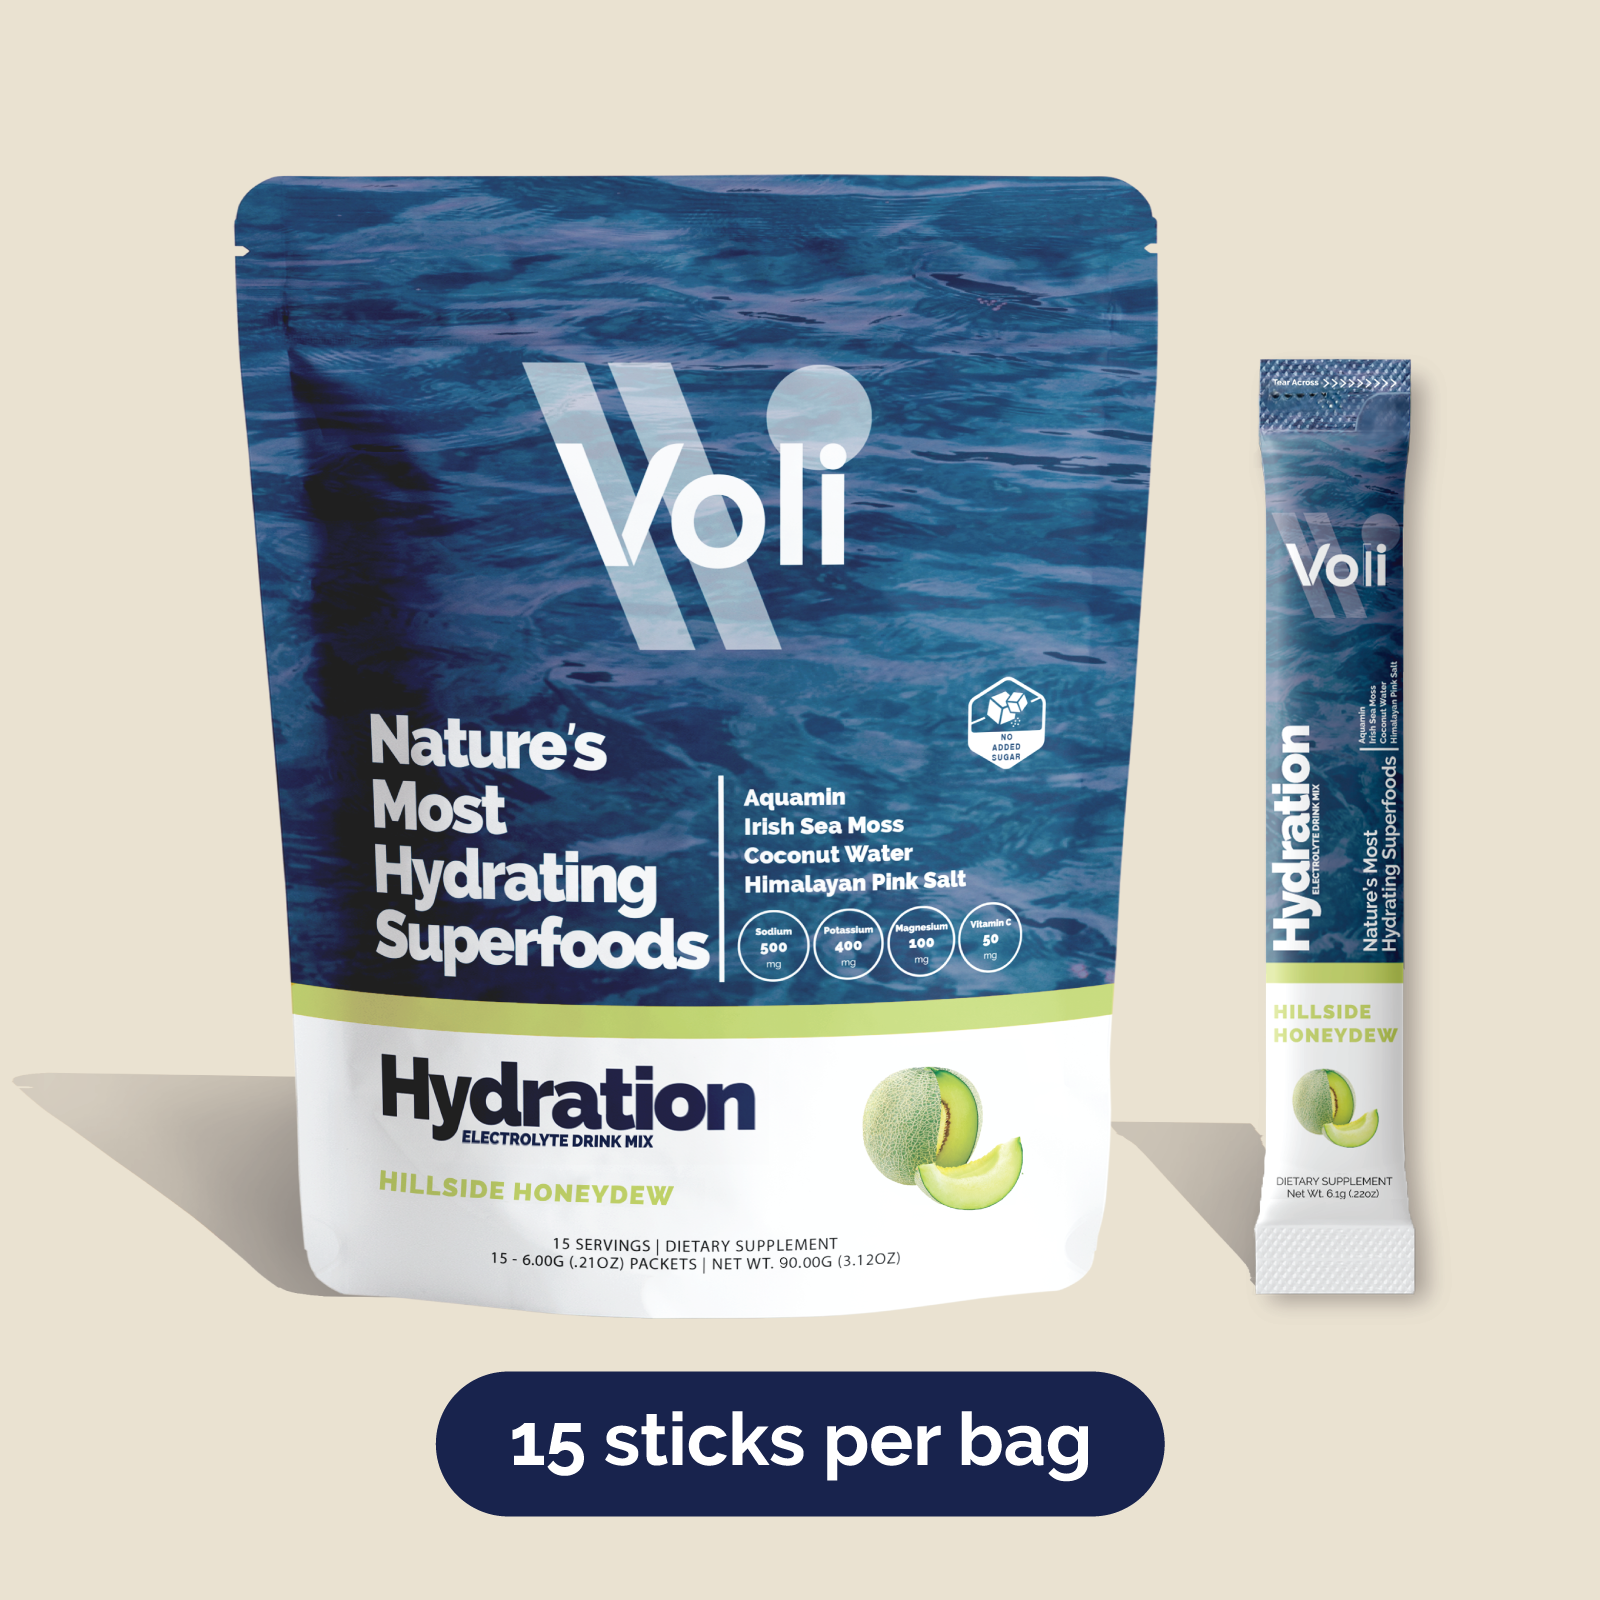 Voli Hydration - Hillside Honeydew